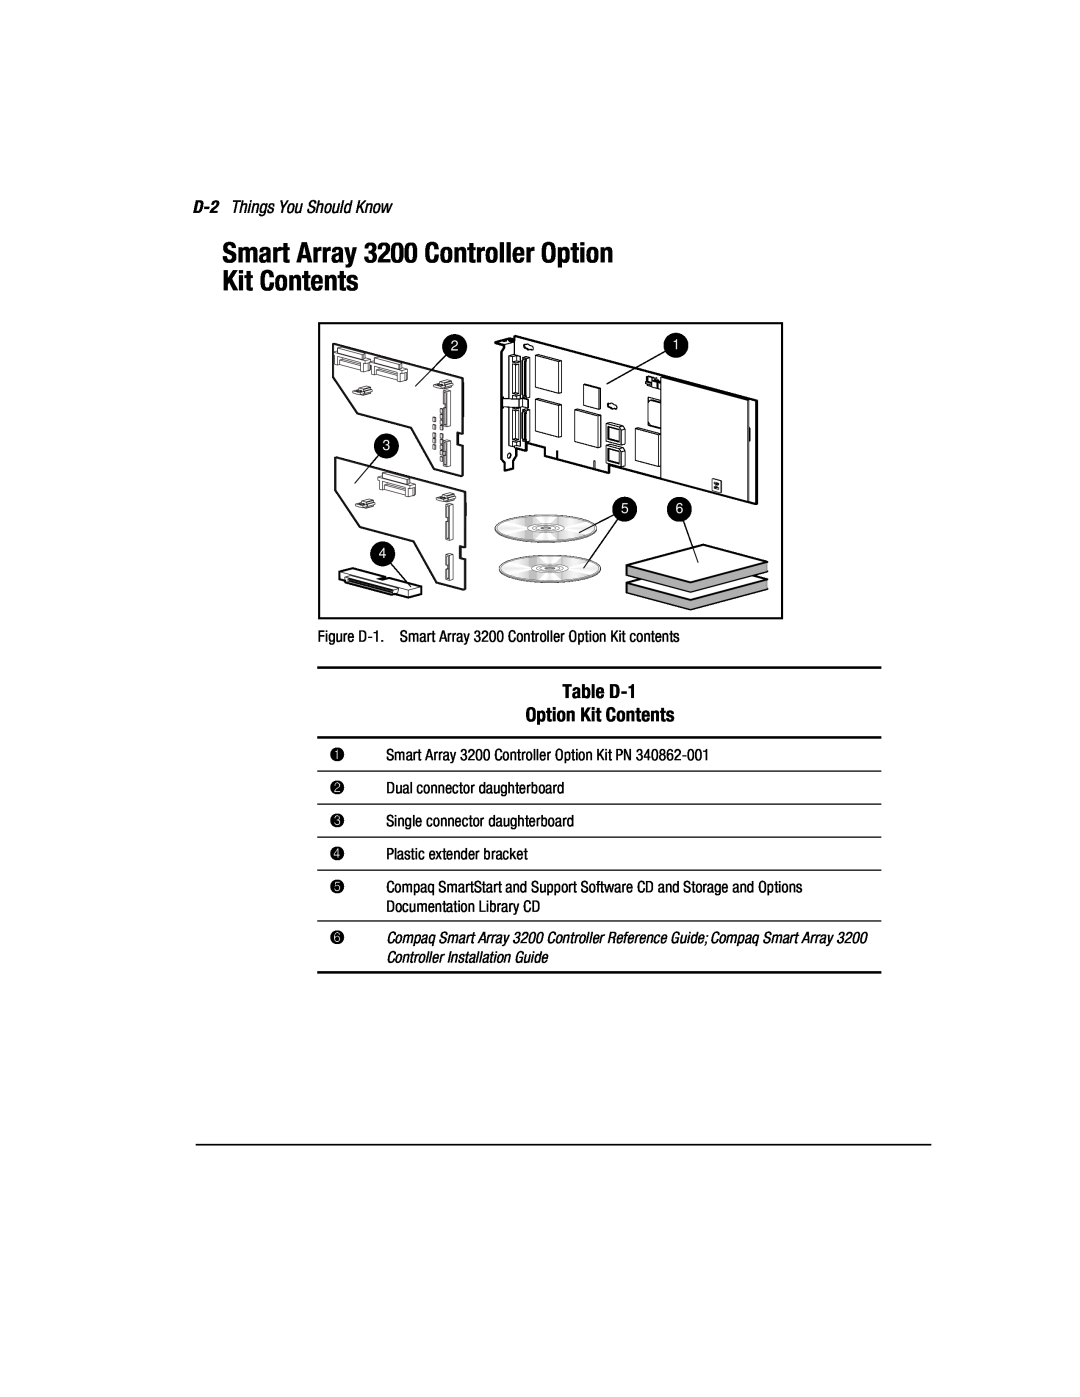 Compaq manual Smart Array 3200 Controller Option Kit Contents, Table D-1 Option Kit Contents, D-2 Things You Should Know 